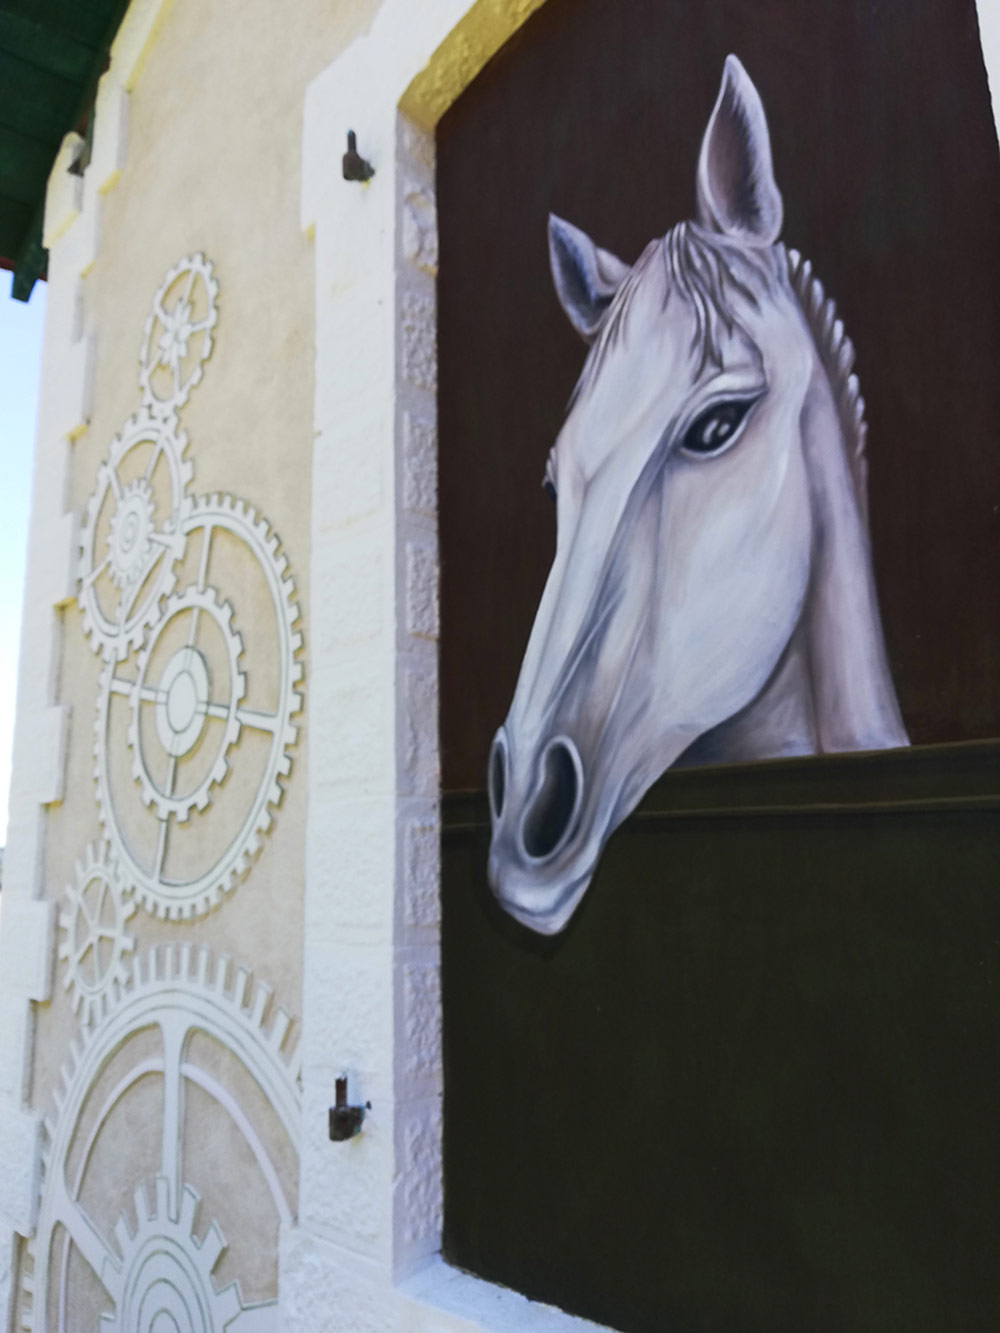 Sophie Canillac muralistes.art gare de tramway d’artigueloutan trompe l’oeil cheval sgraffito chaux